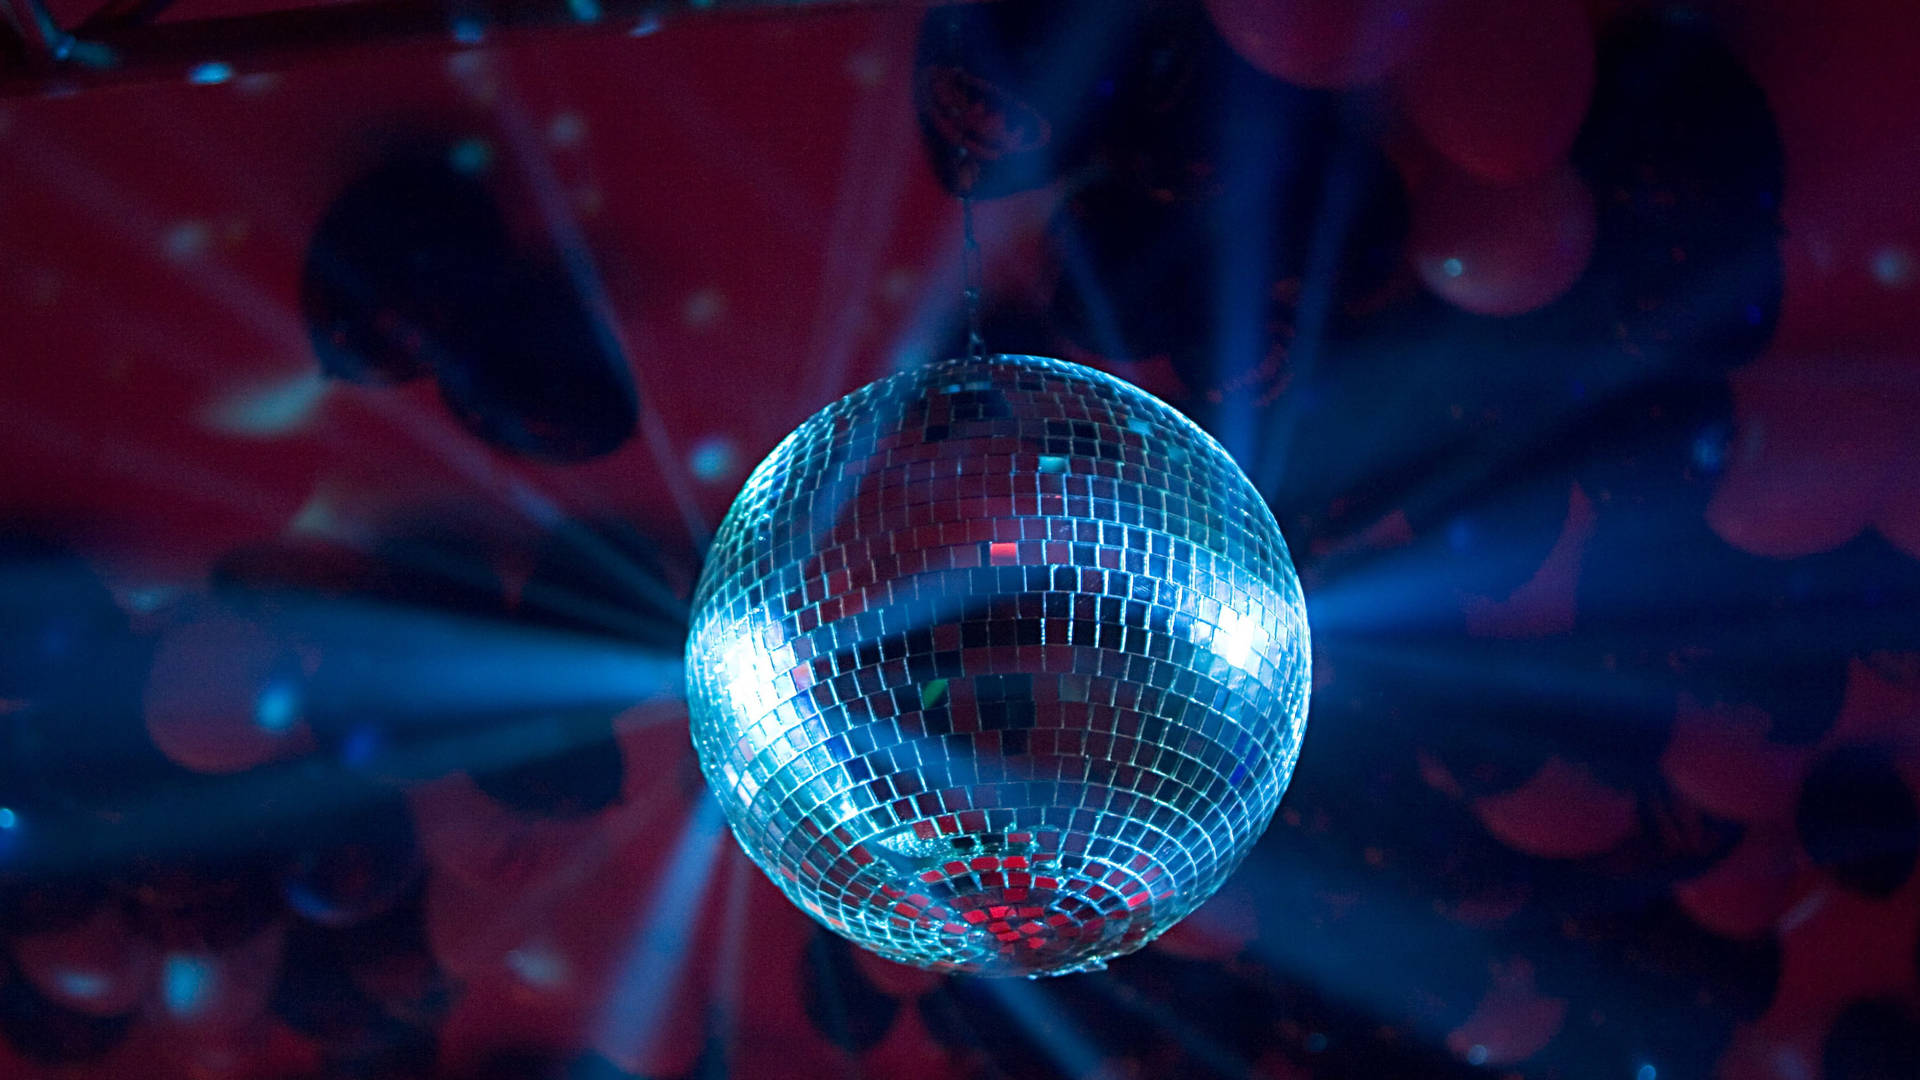 Silver Disco Ball Background